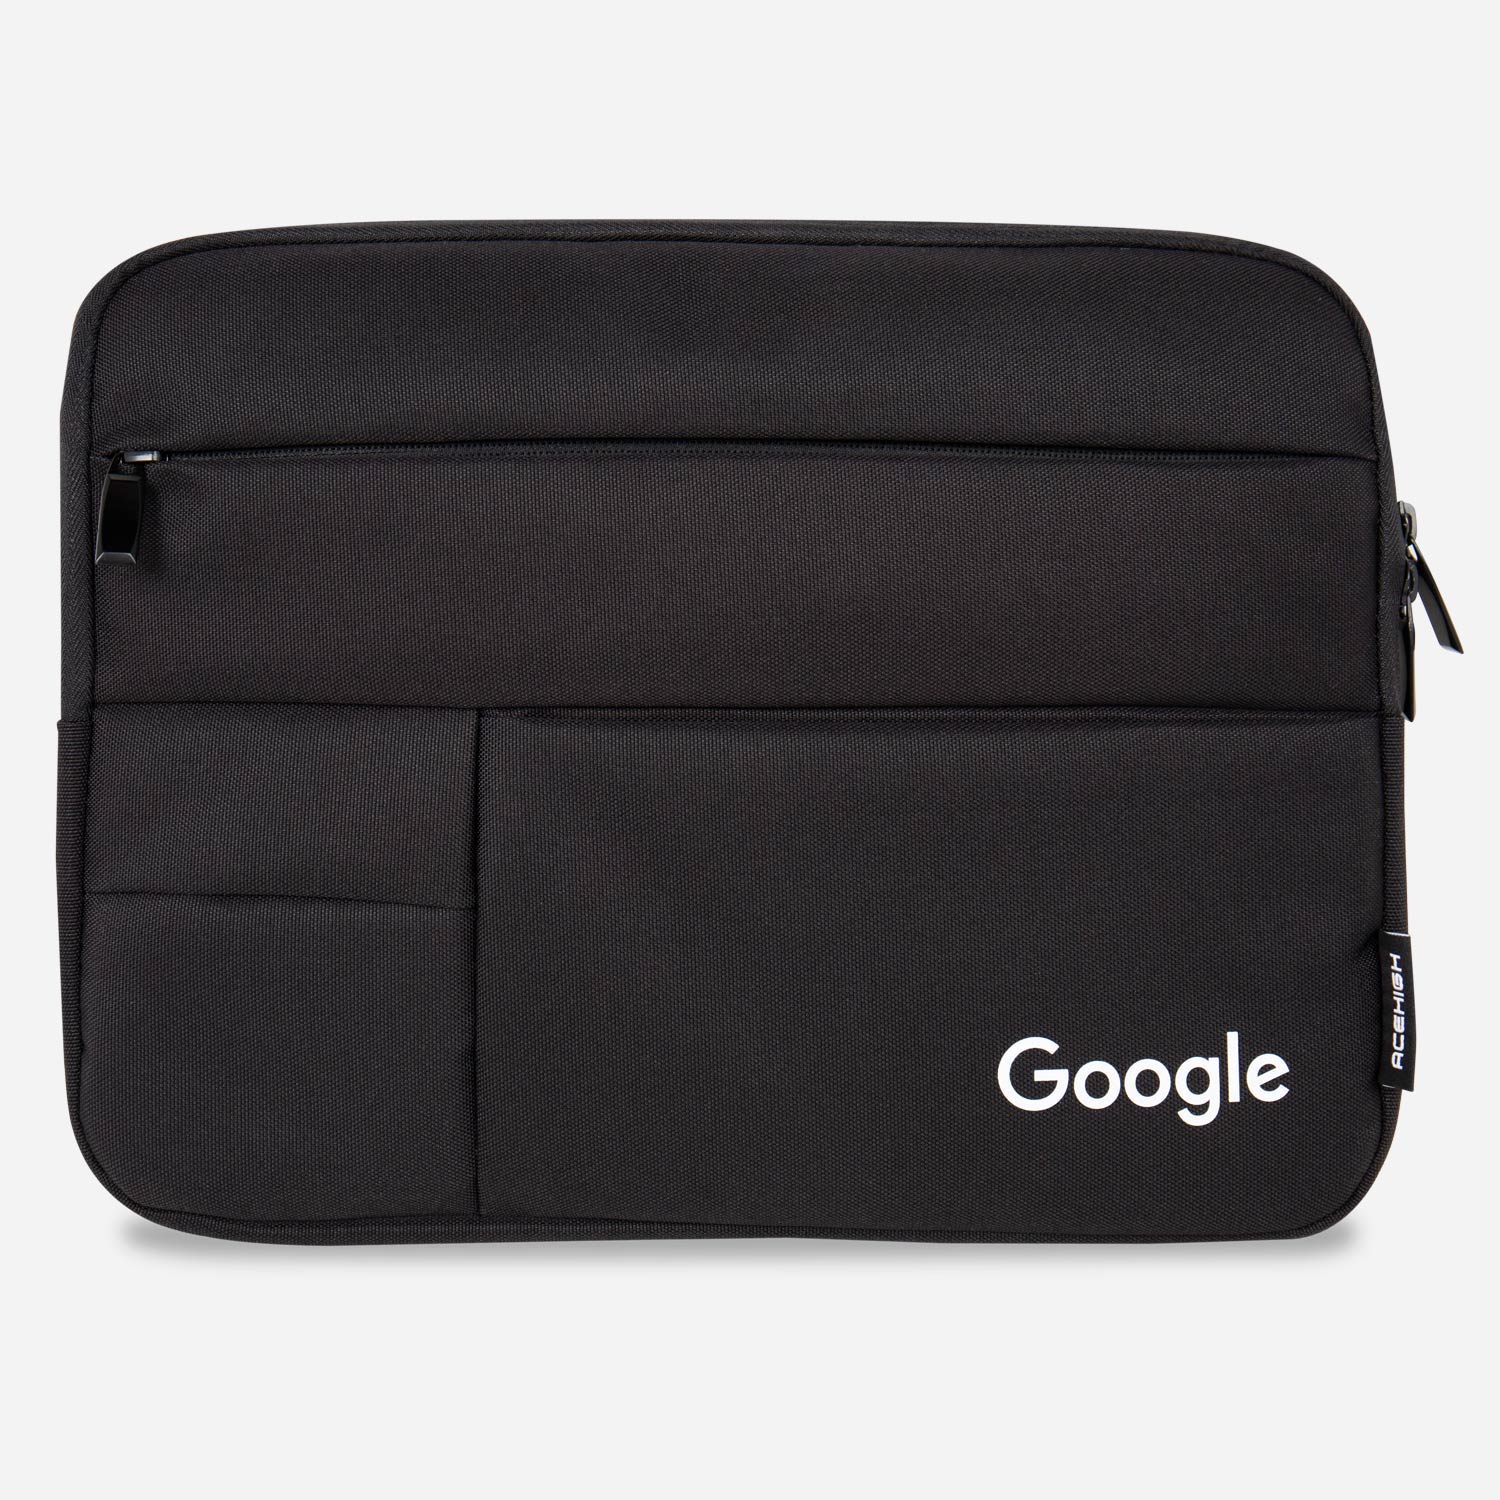 sleeve laptop bag